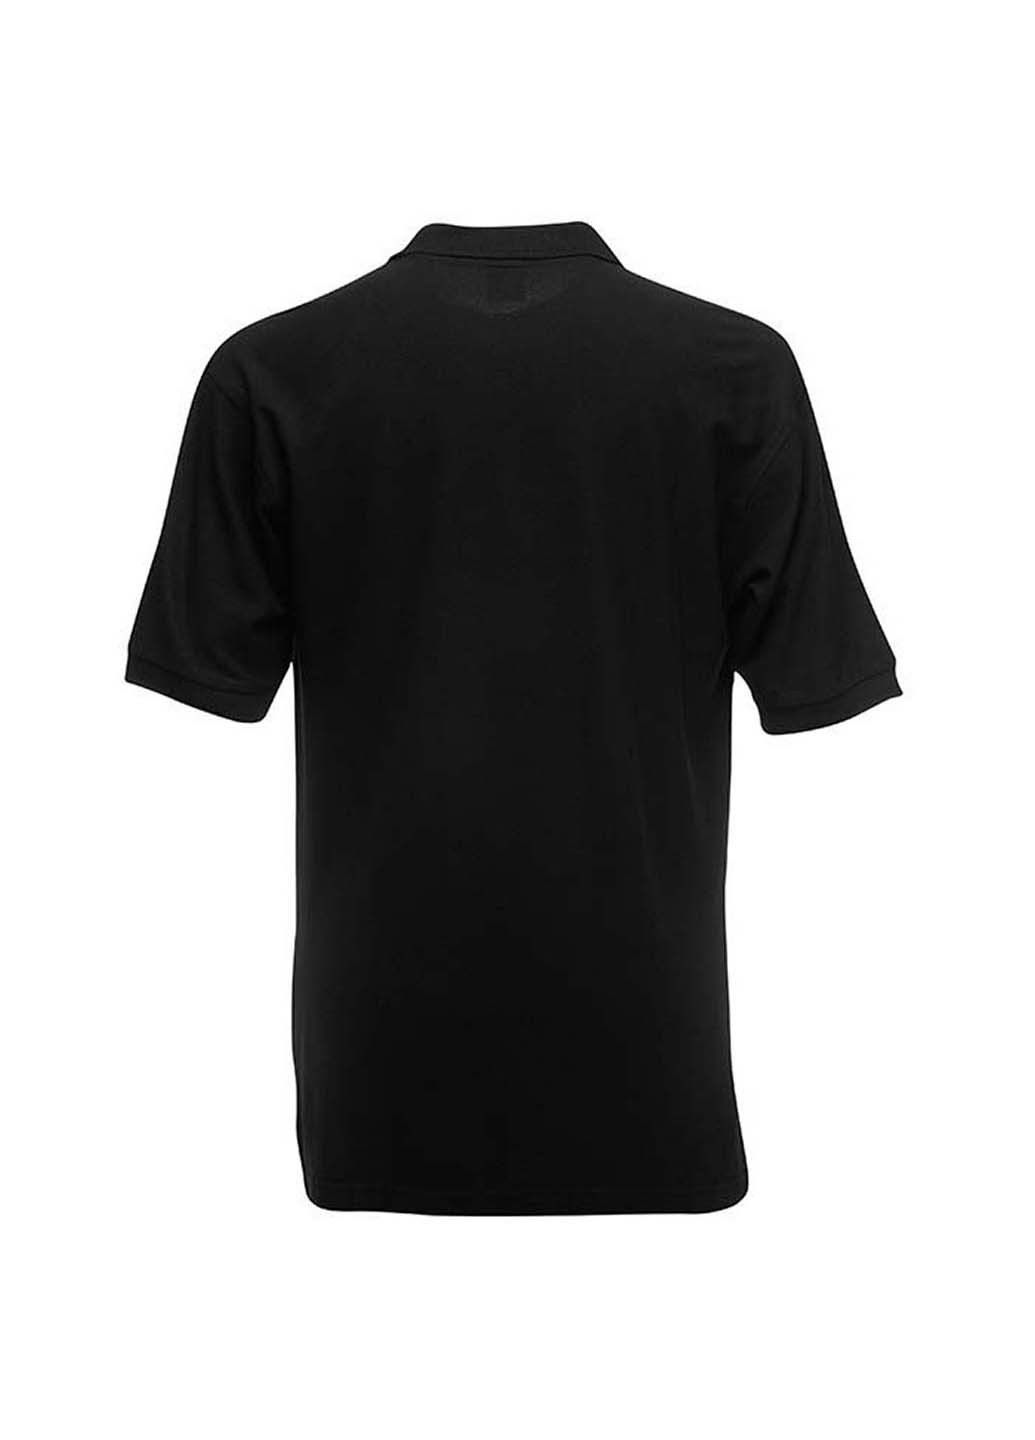 Черная футболка-поло для мужчин Fruit of the Loom